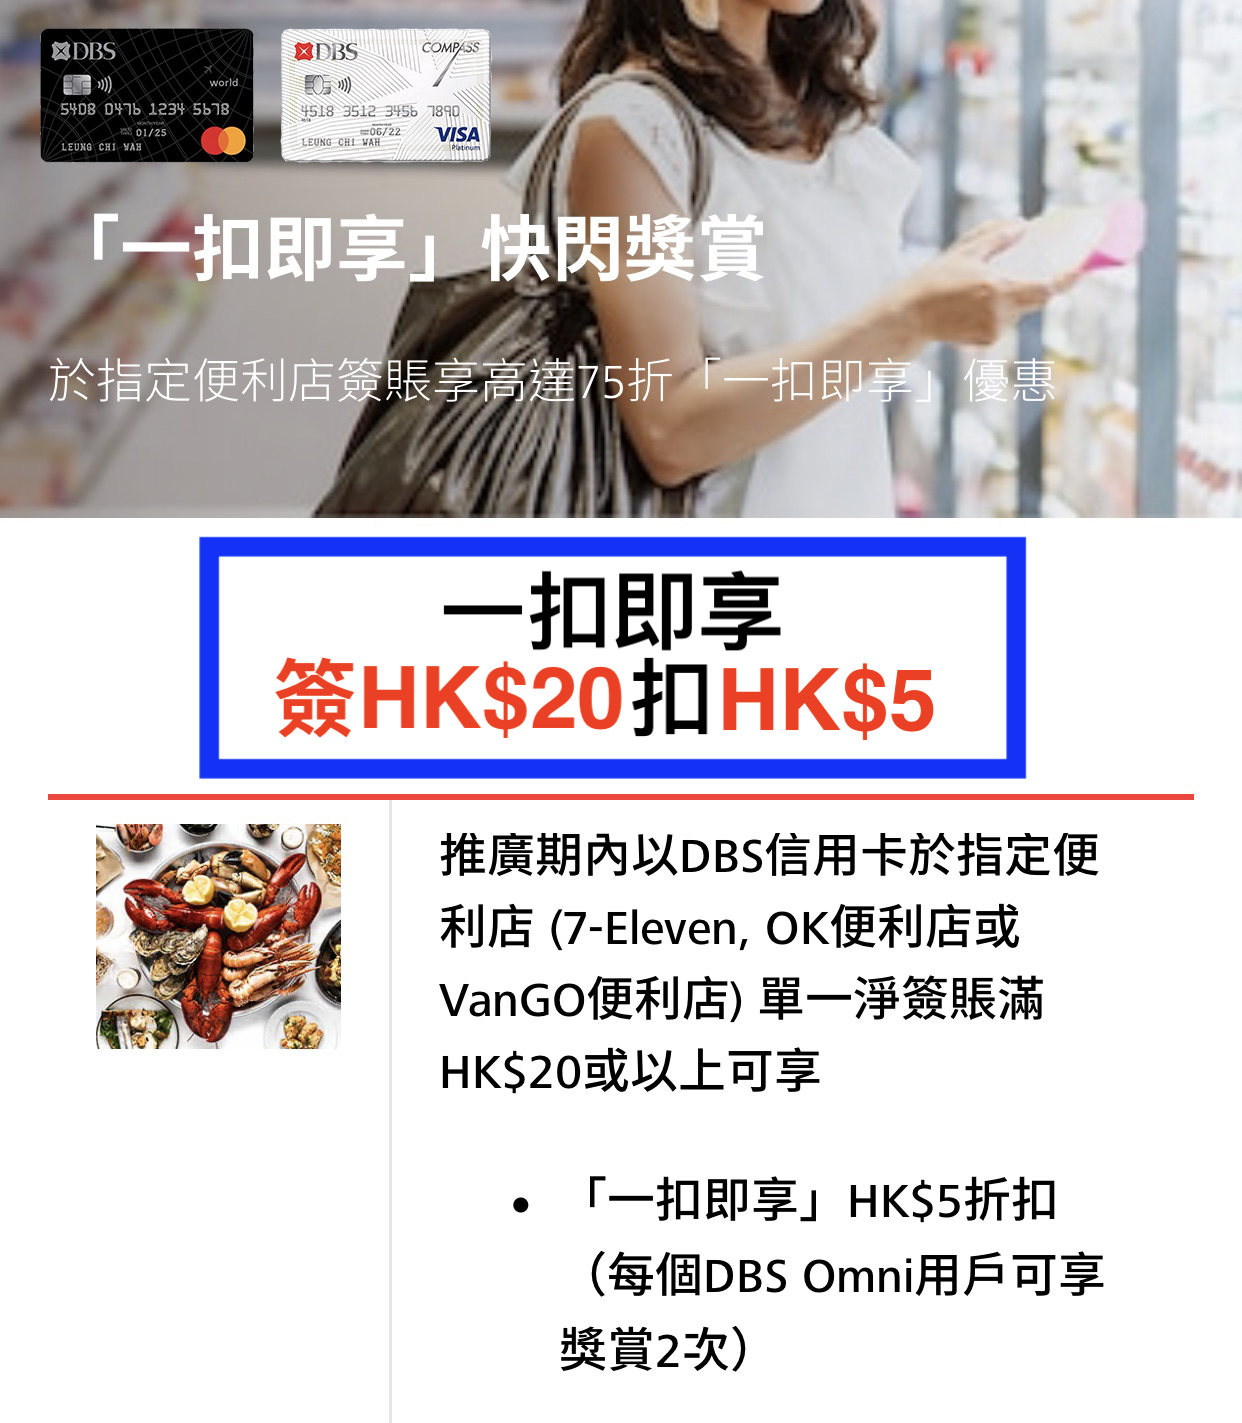 DBS信用卡7-Eleven、OK便利店及VanGO便利店優惠！一扣即享簽HK$20扣$5！最多可用2次！